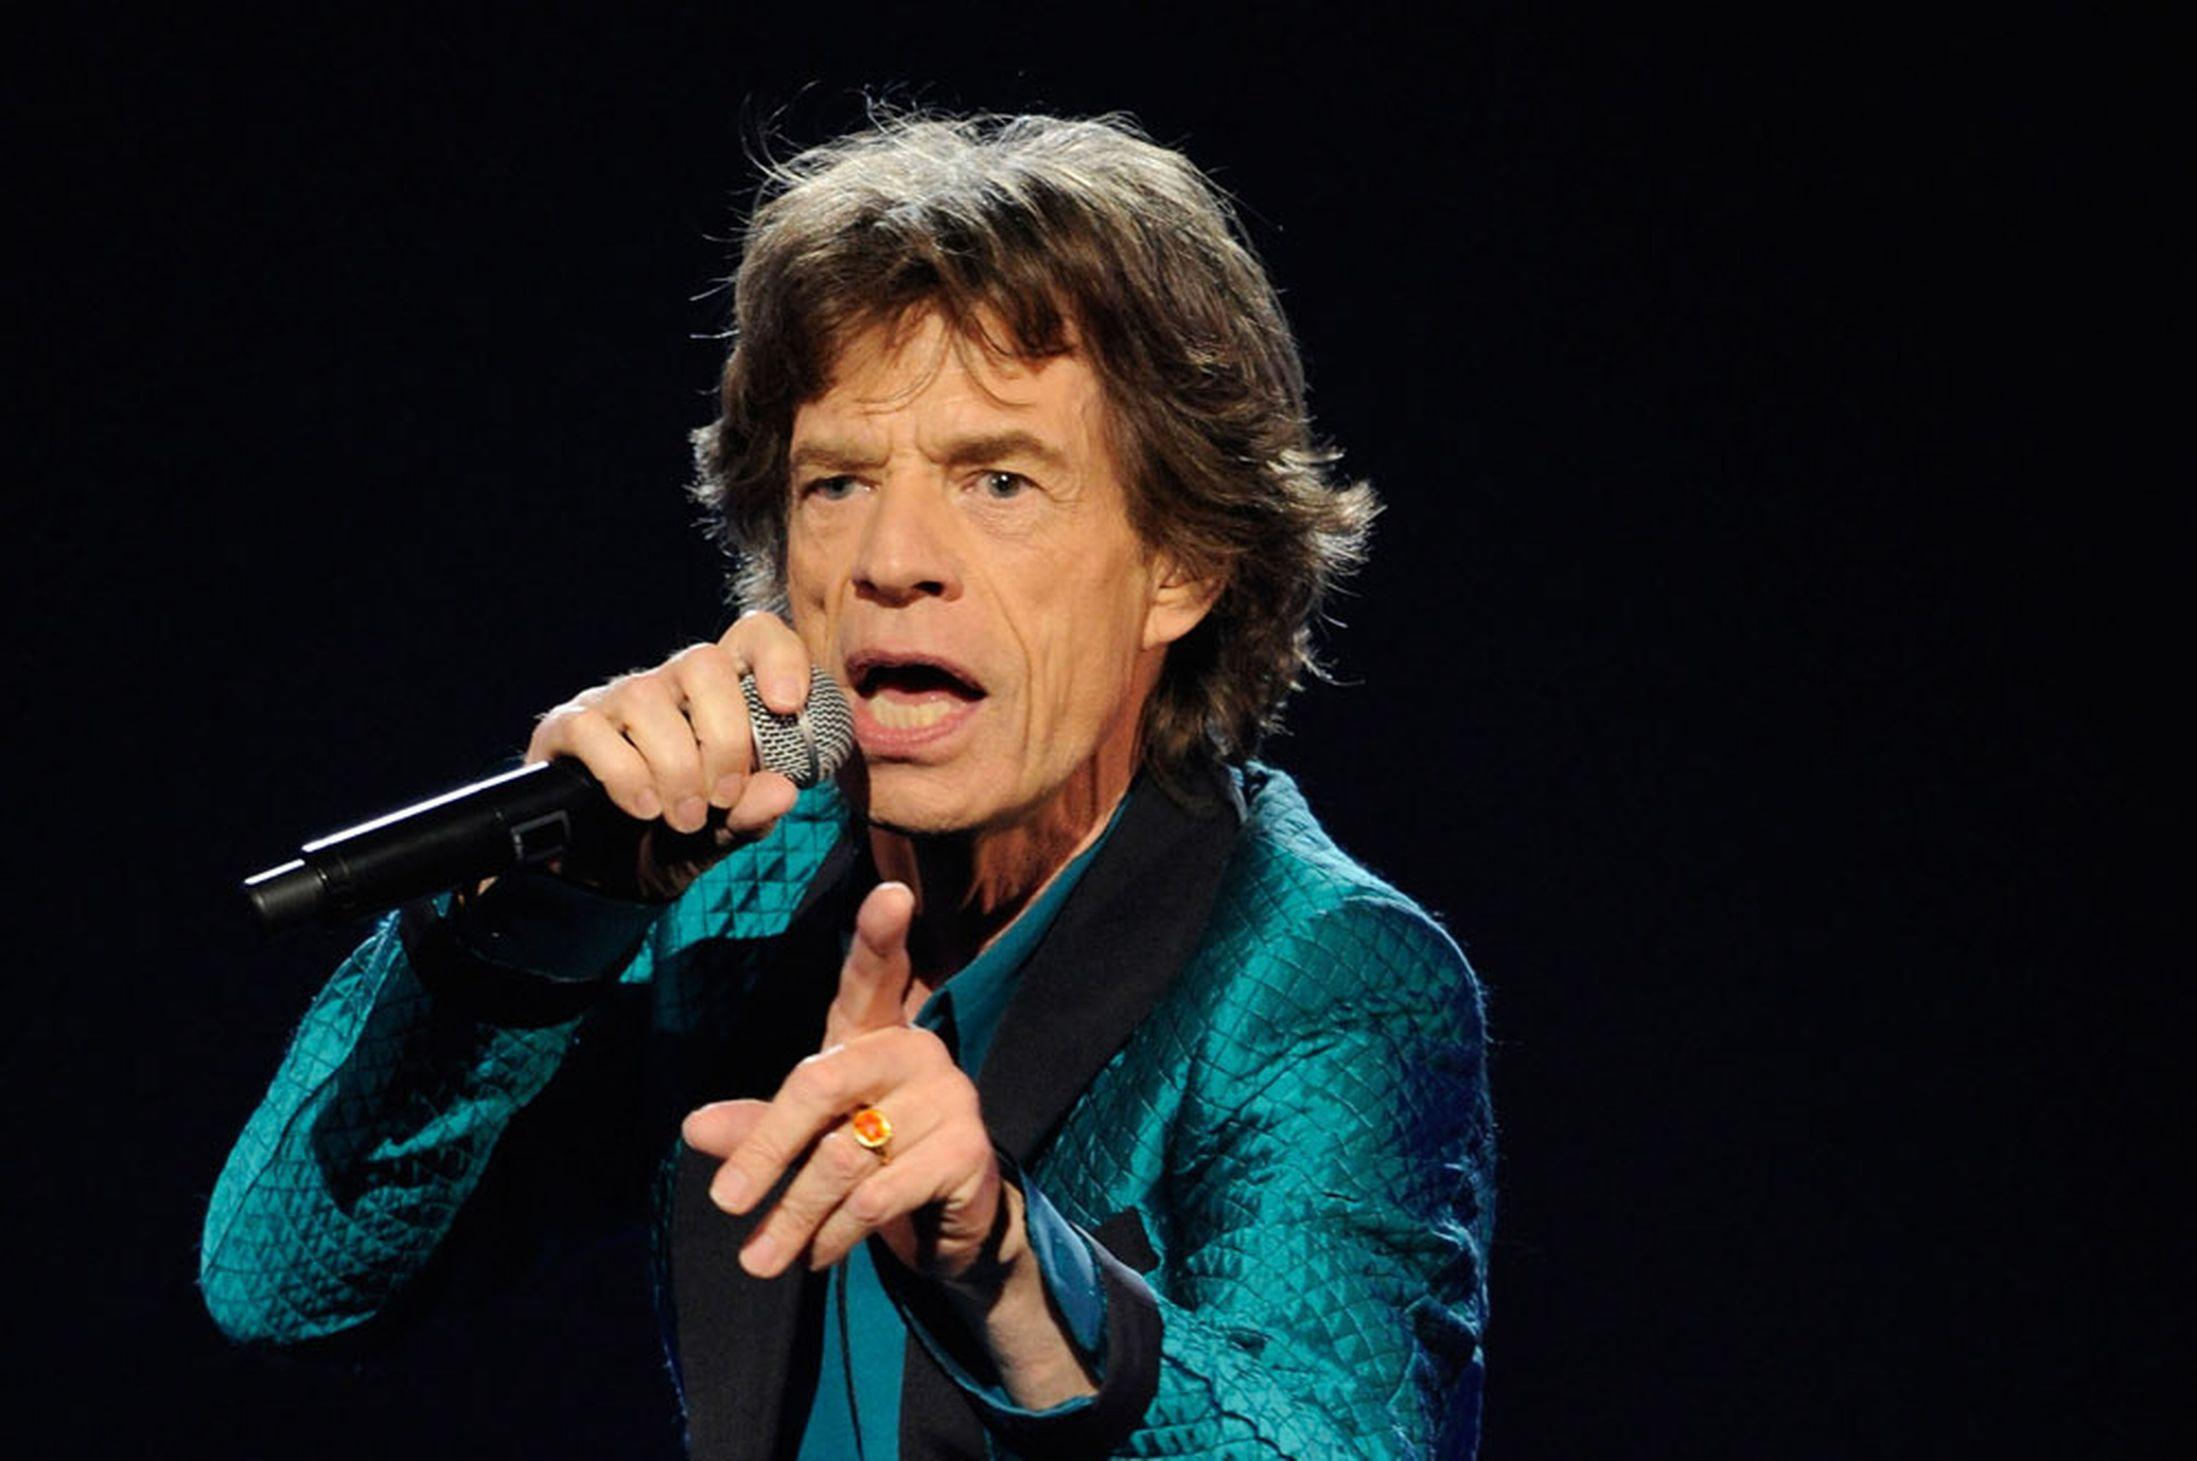 Mick Jagger Captions For Instagram